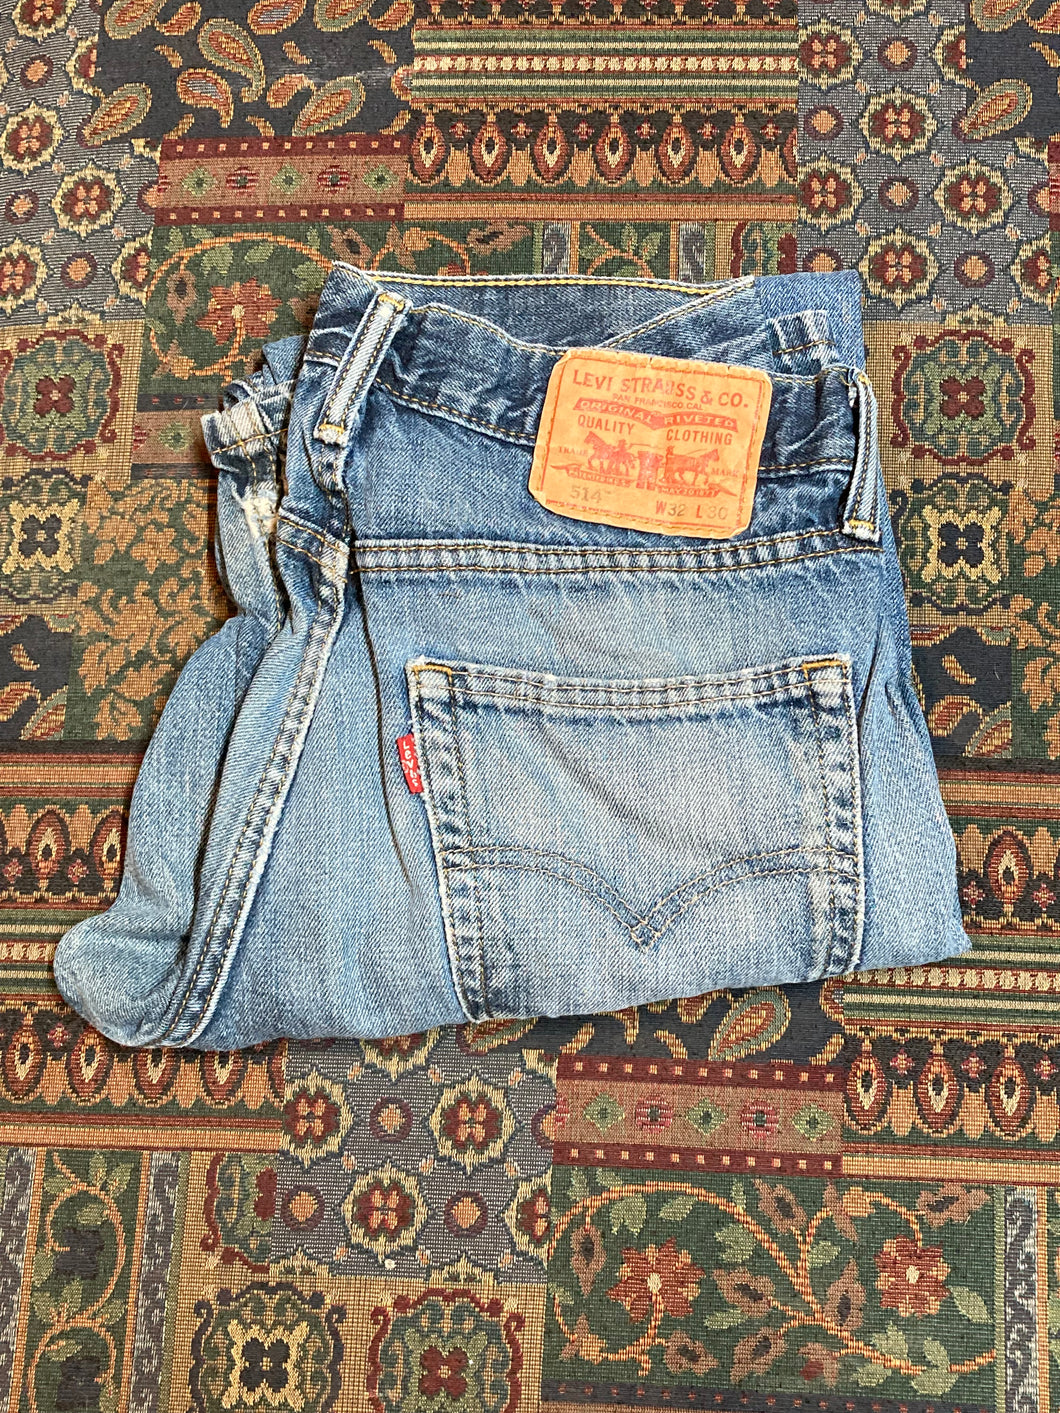 Levi's 514 Vintage Red Tab Denim Jeans, Made Mexico – KingsPIER vintage